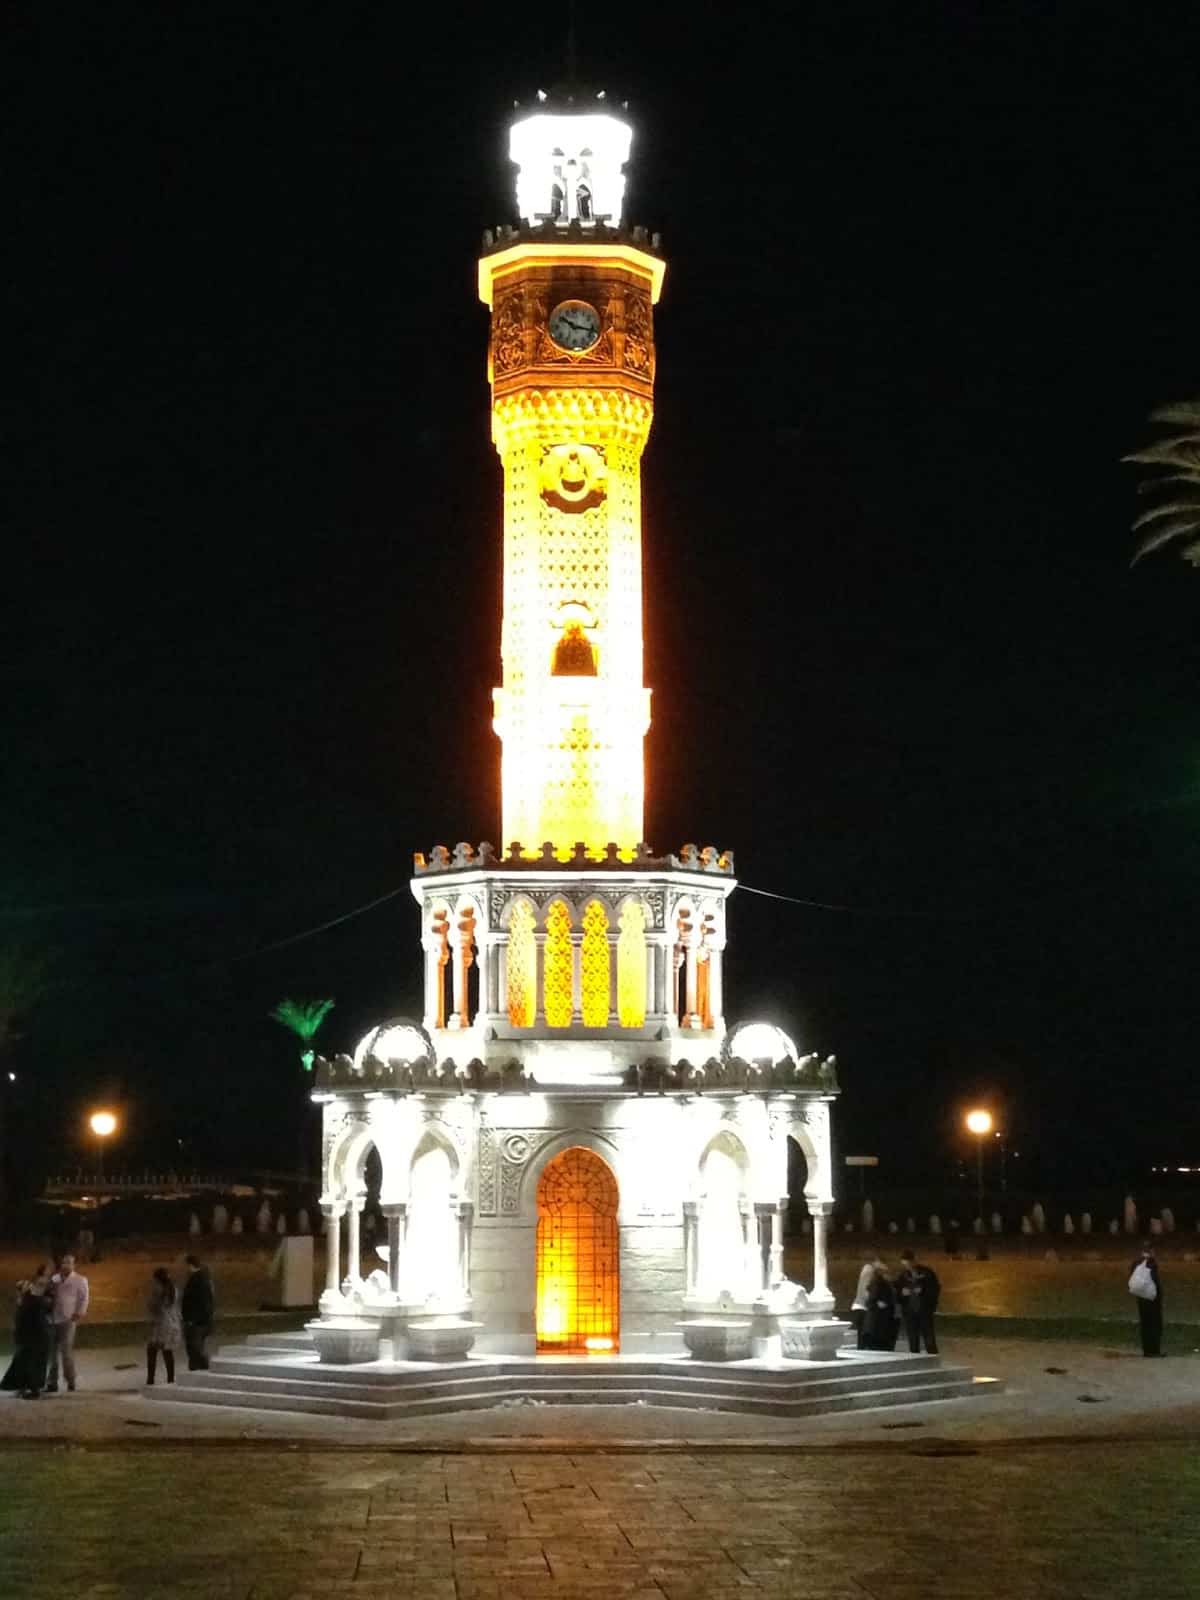 İzmir Saat Kulesi in Izmir, Turkey